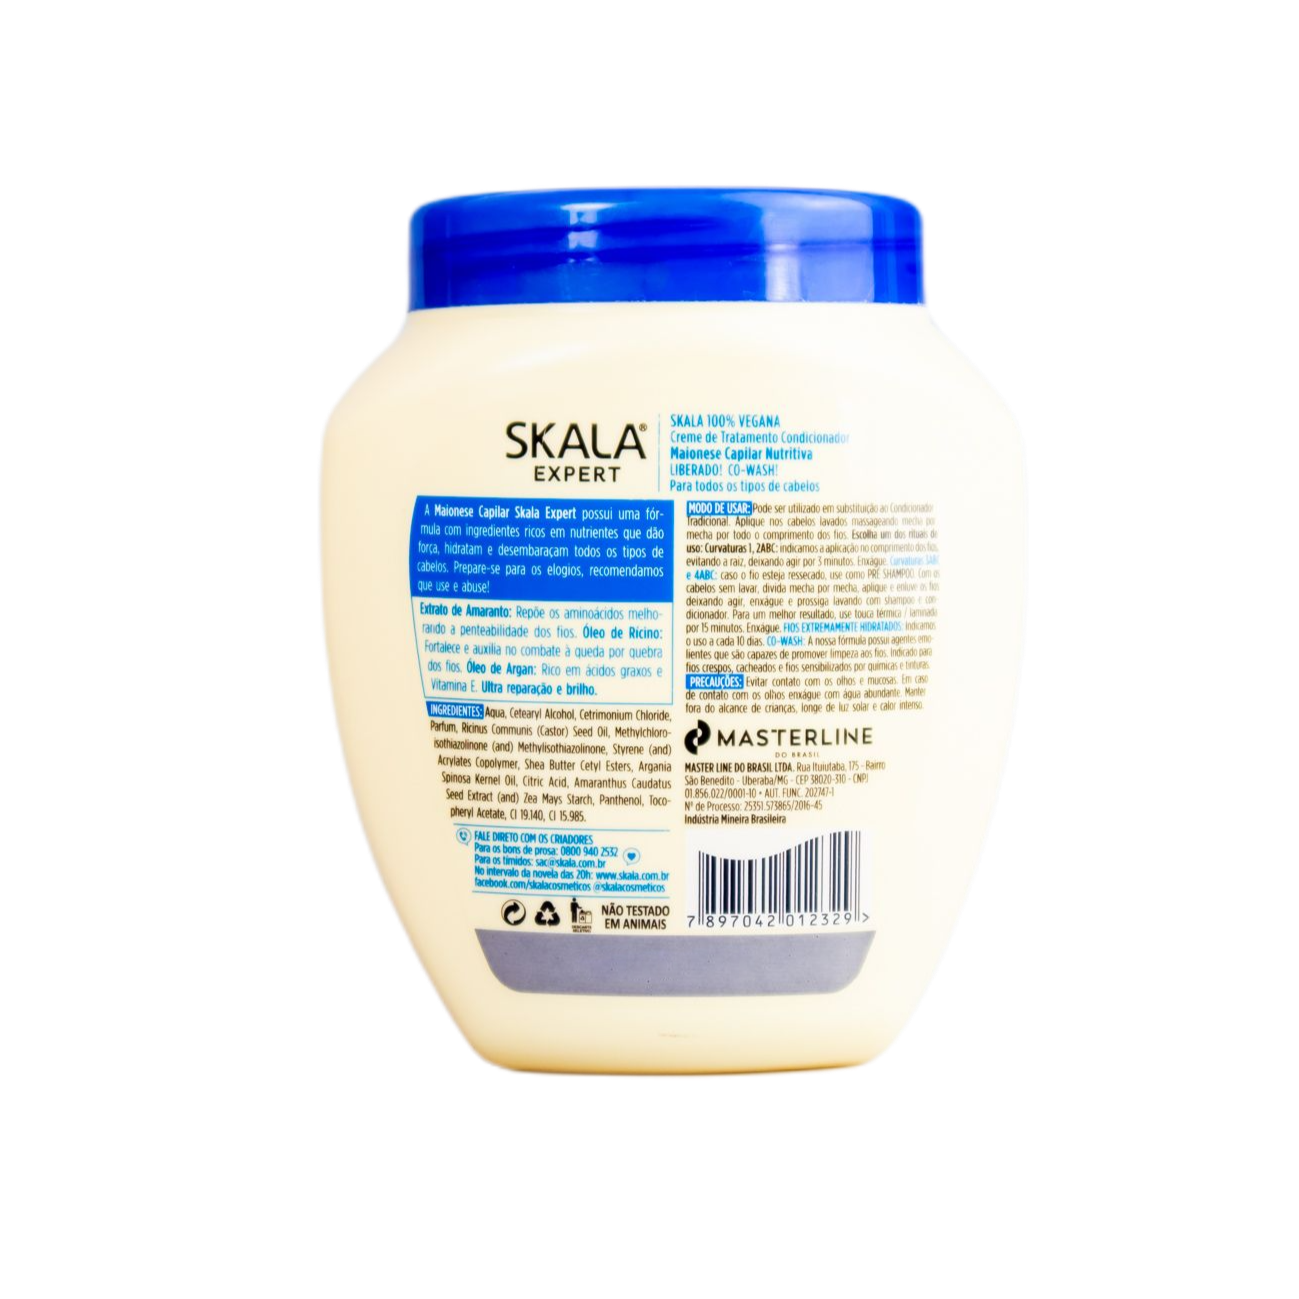 Skala Treatment Cream Creme De Tratamento Maionese Capilar Nutritiva / Nutritive Cream Treatment Capillary Mayonnaise Treatment Cream - Skala